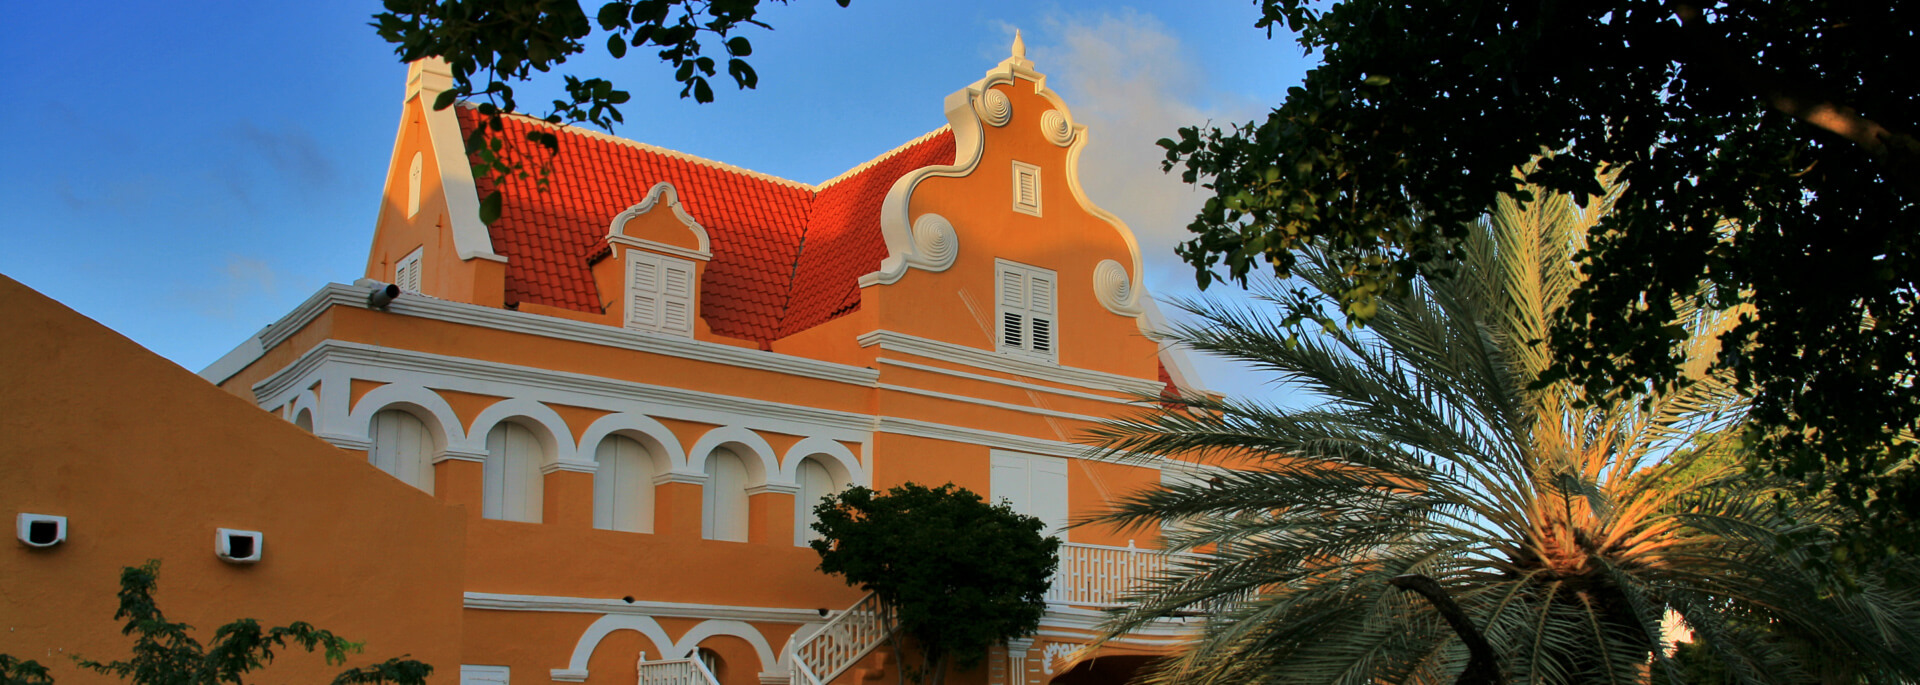 Fotos: Willemstad, Curacao